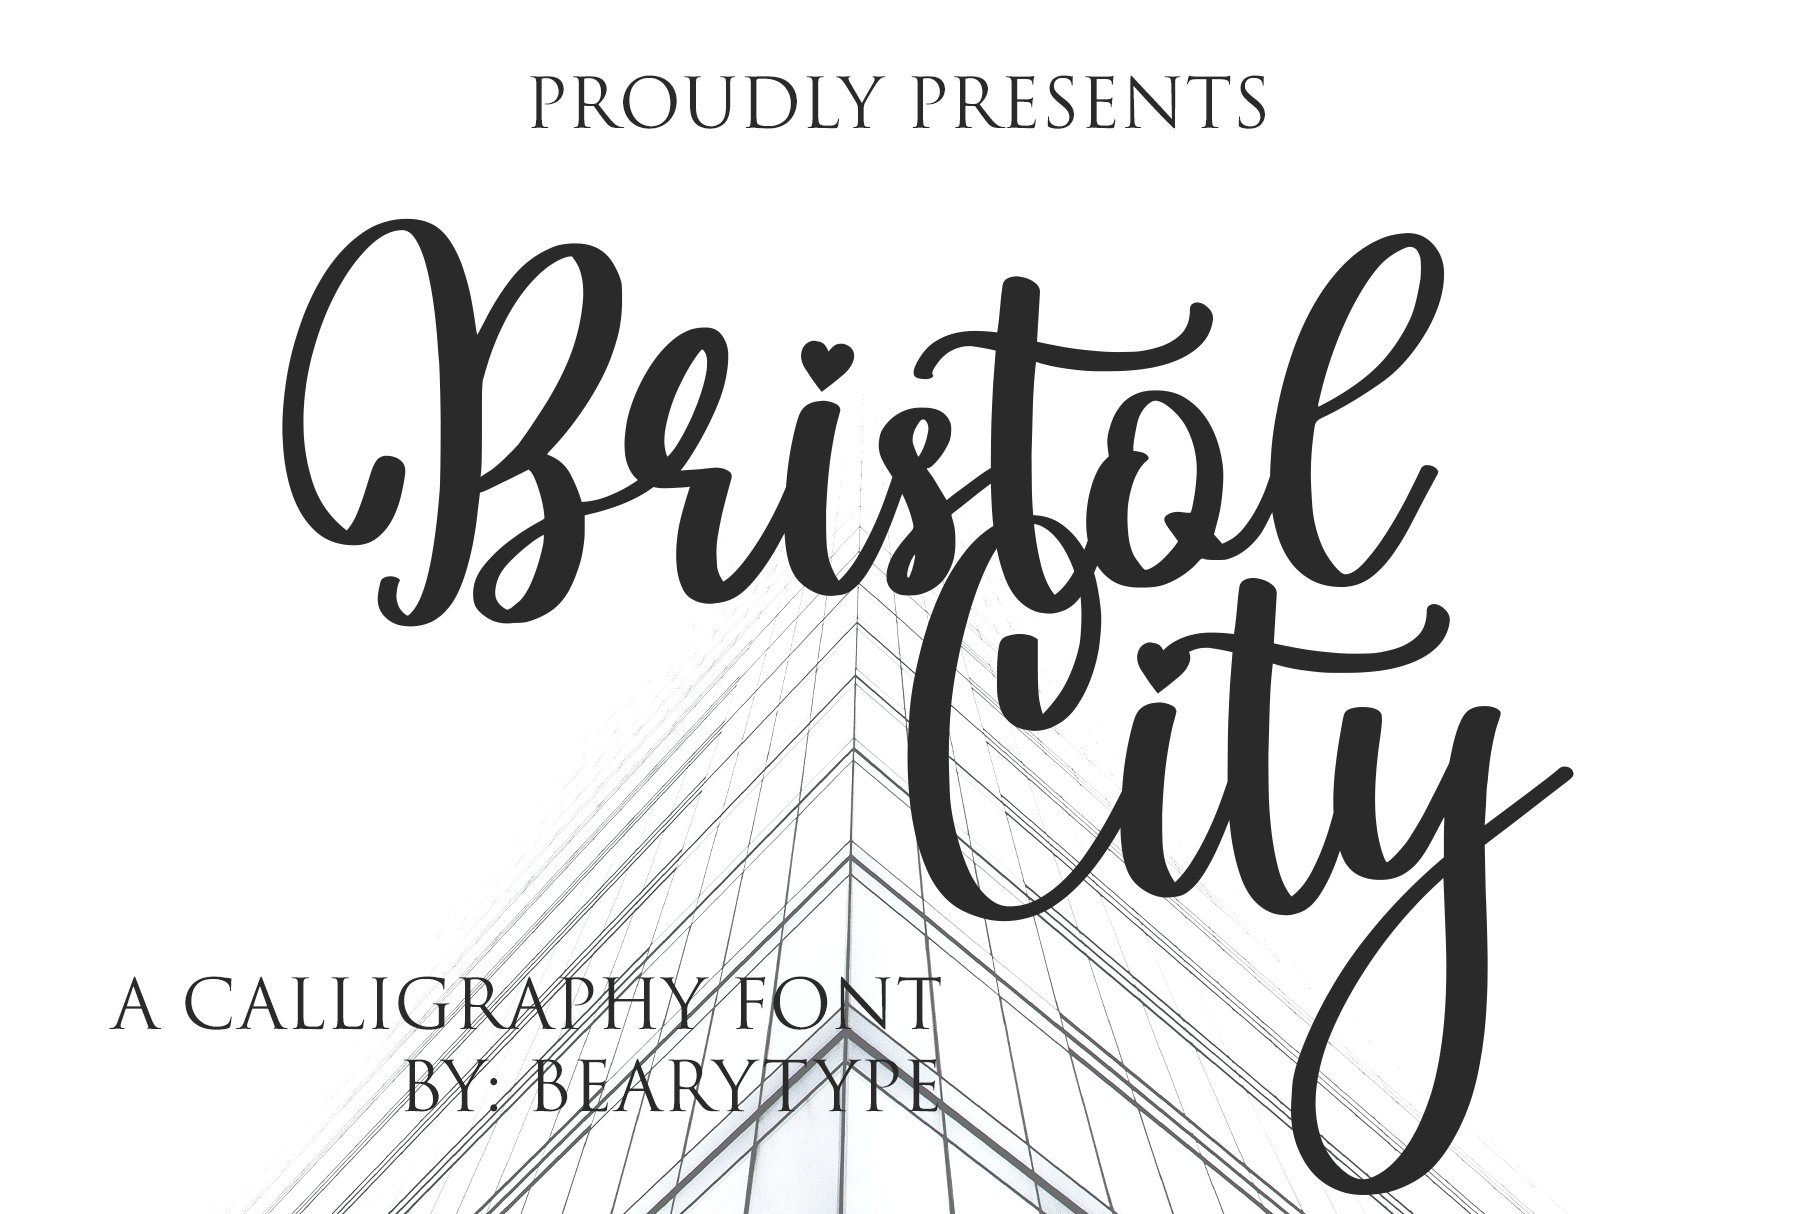 Bristol City cover image.